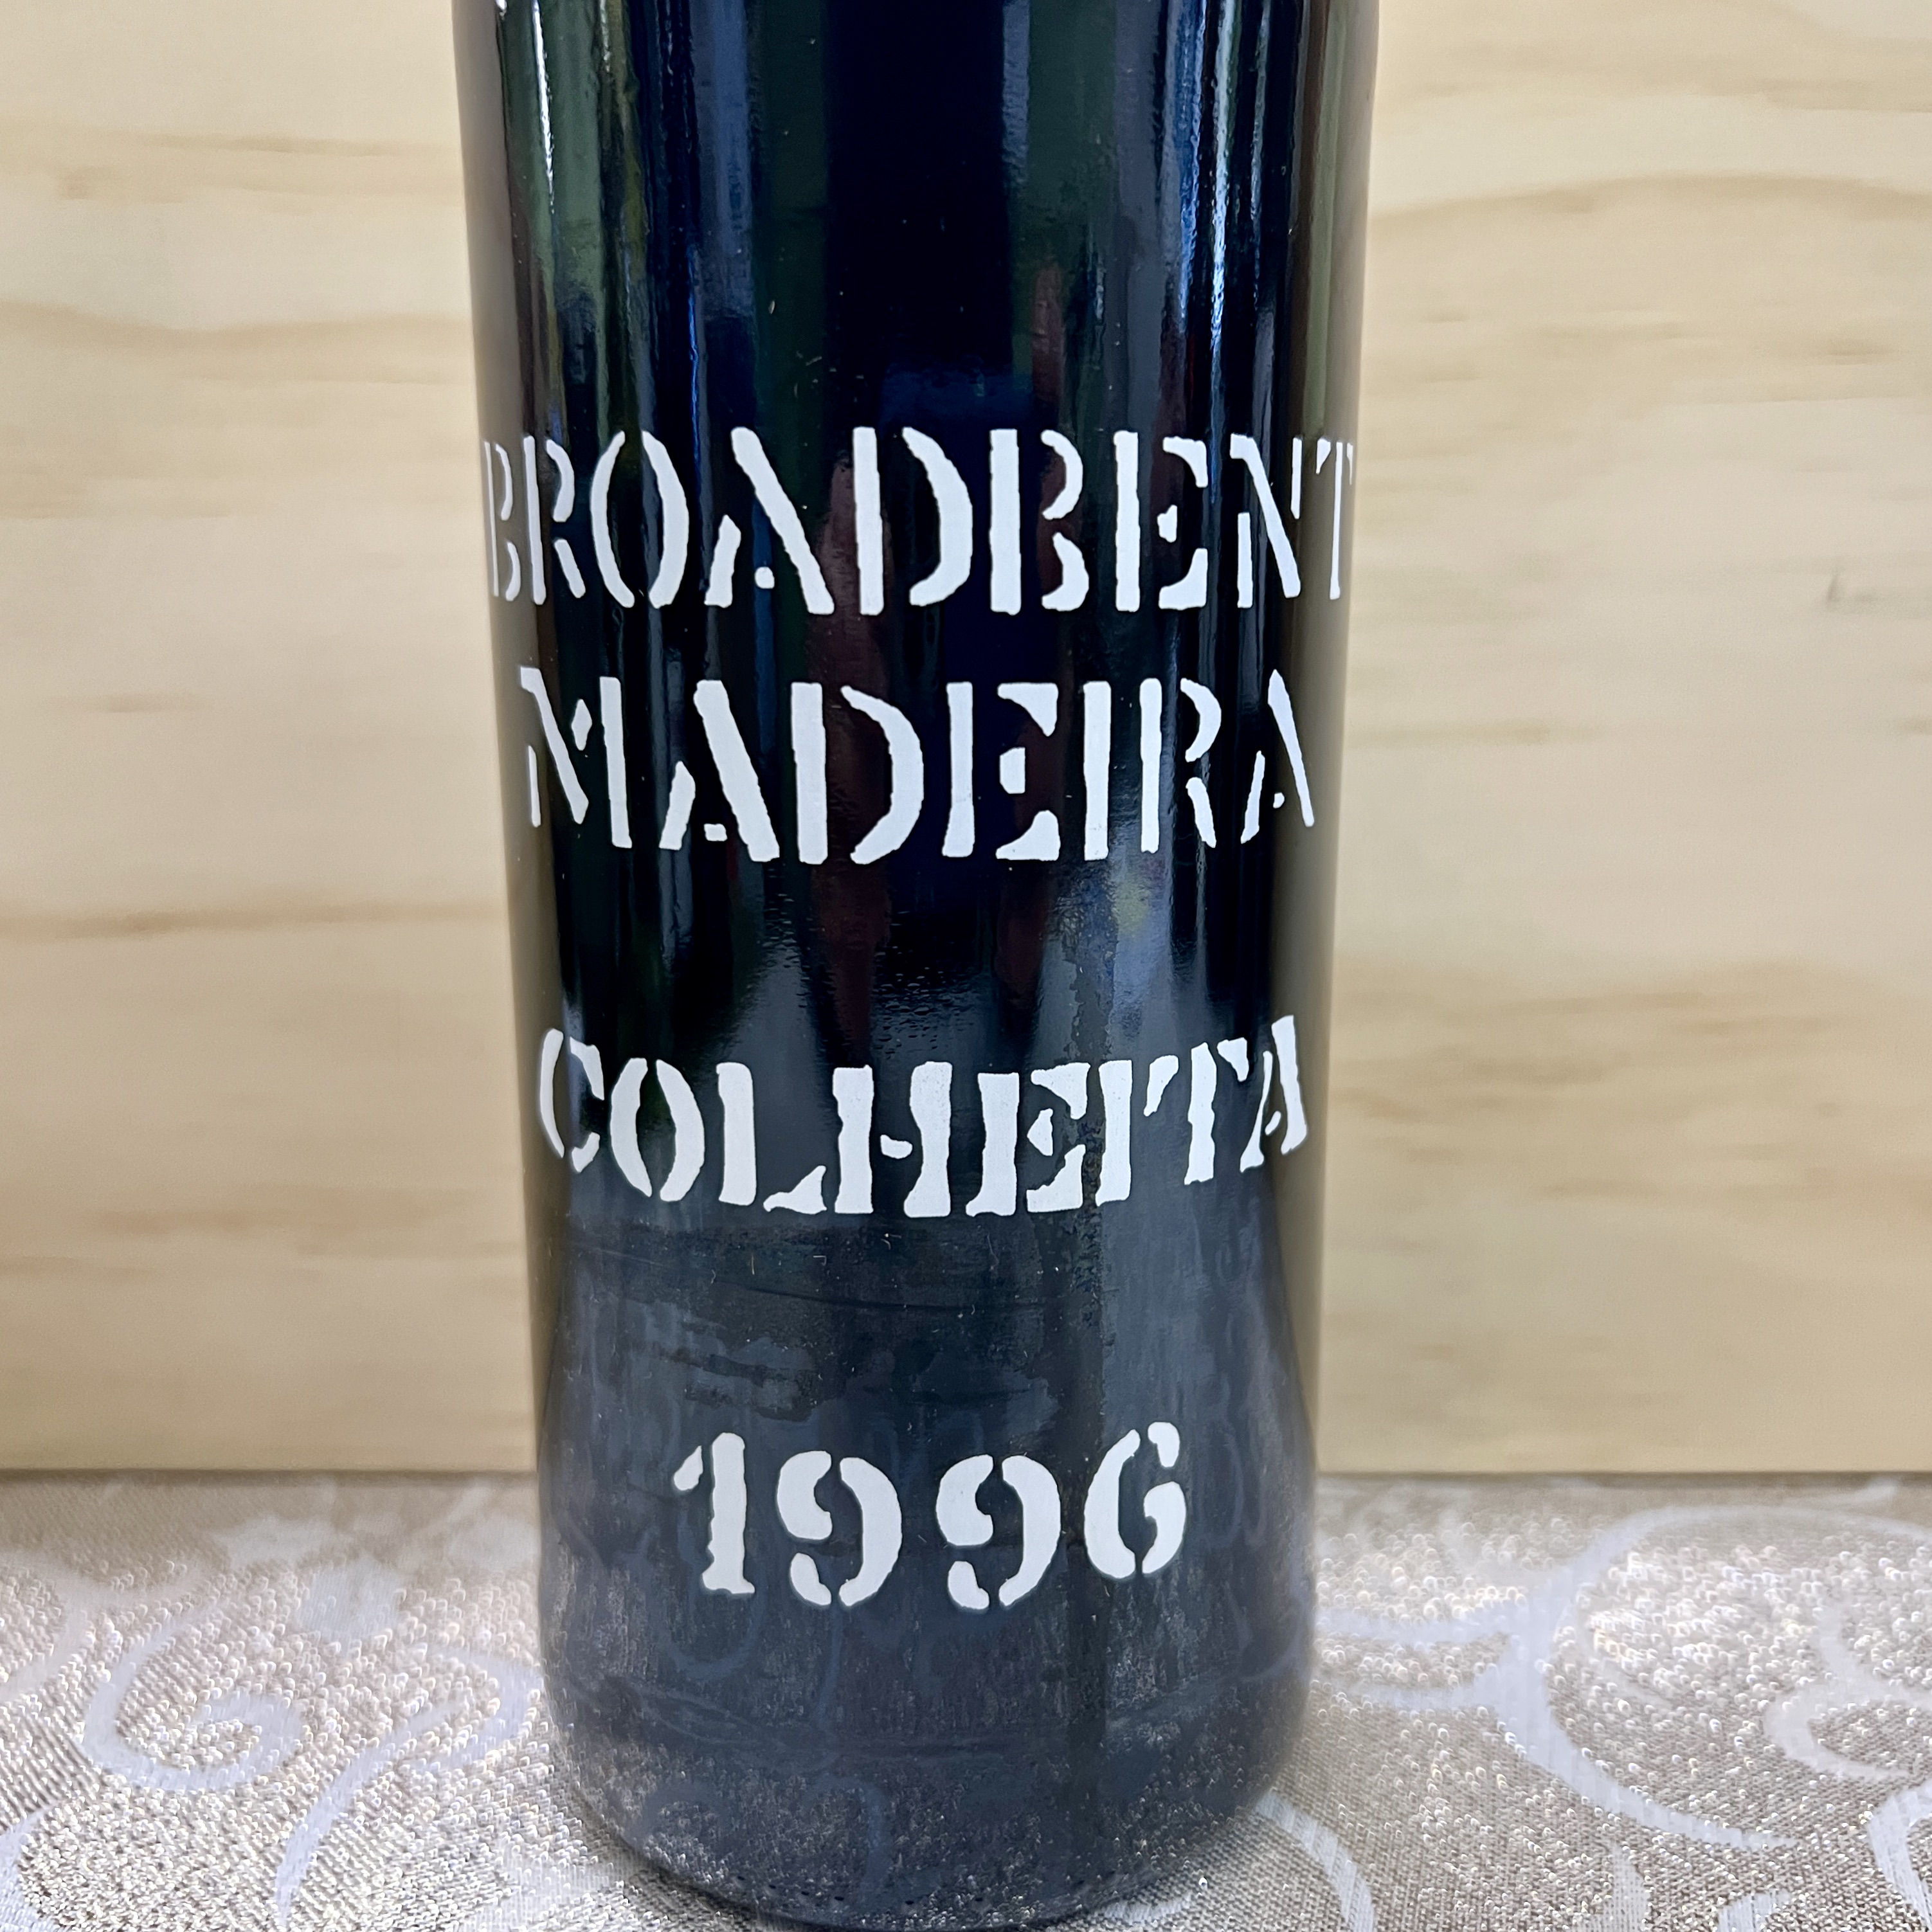 Broadbent Madeira Colheita 1996